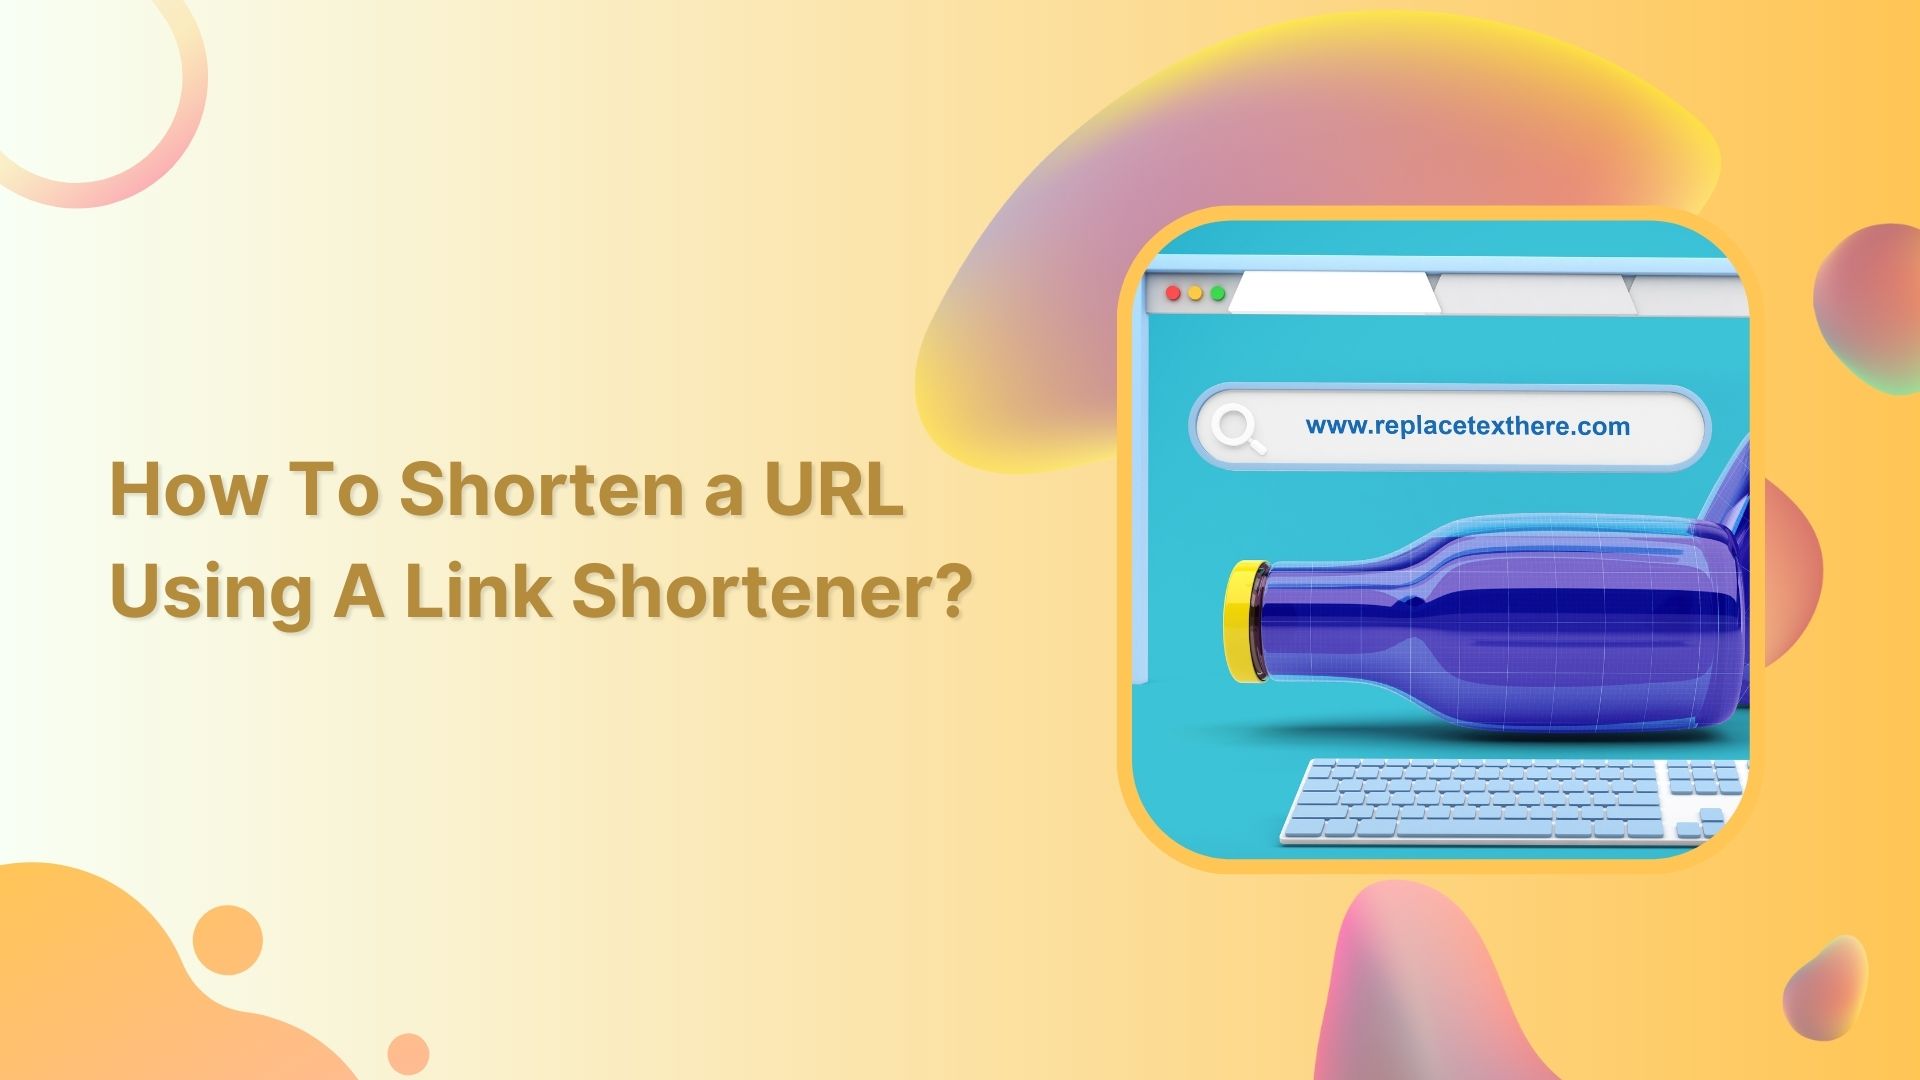 How to shorten a link using a URL shortener